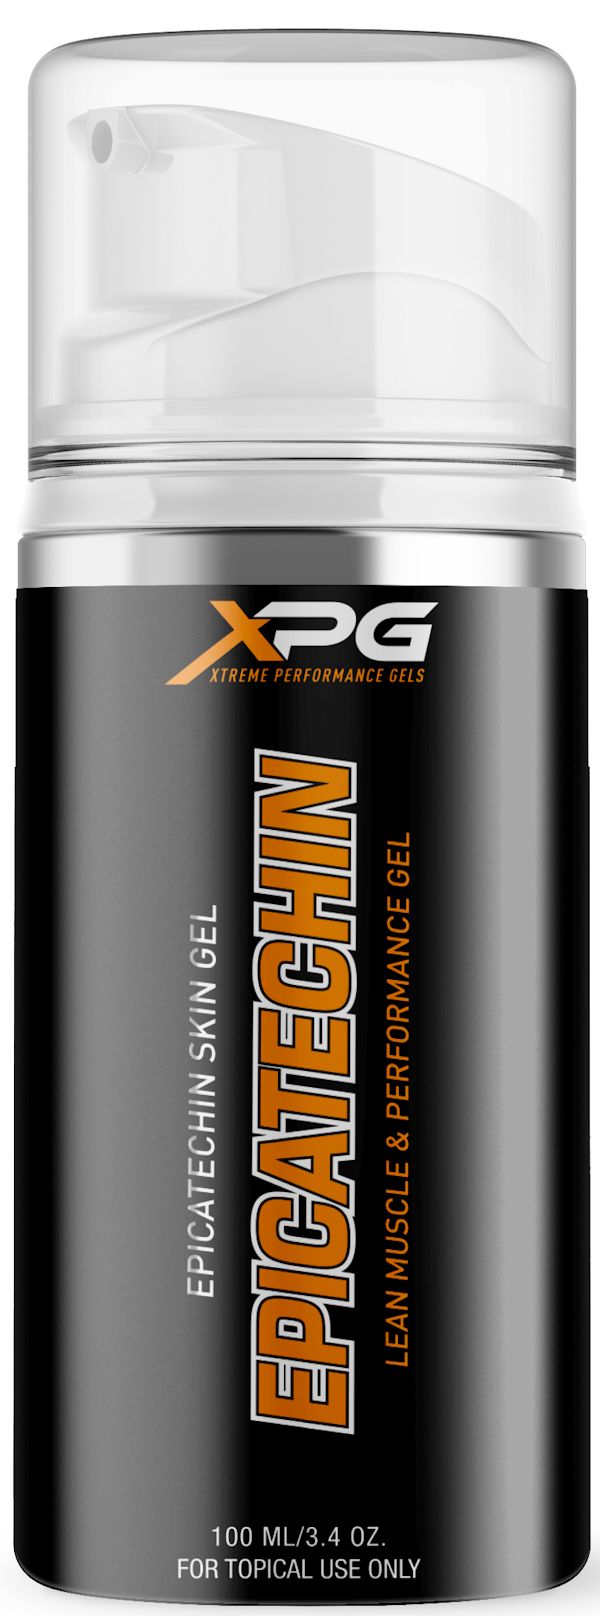 Xtreme Performance Gels XPG Epicatechin Gel Lean Muscle|Lowcostvitamin.com